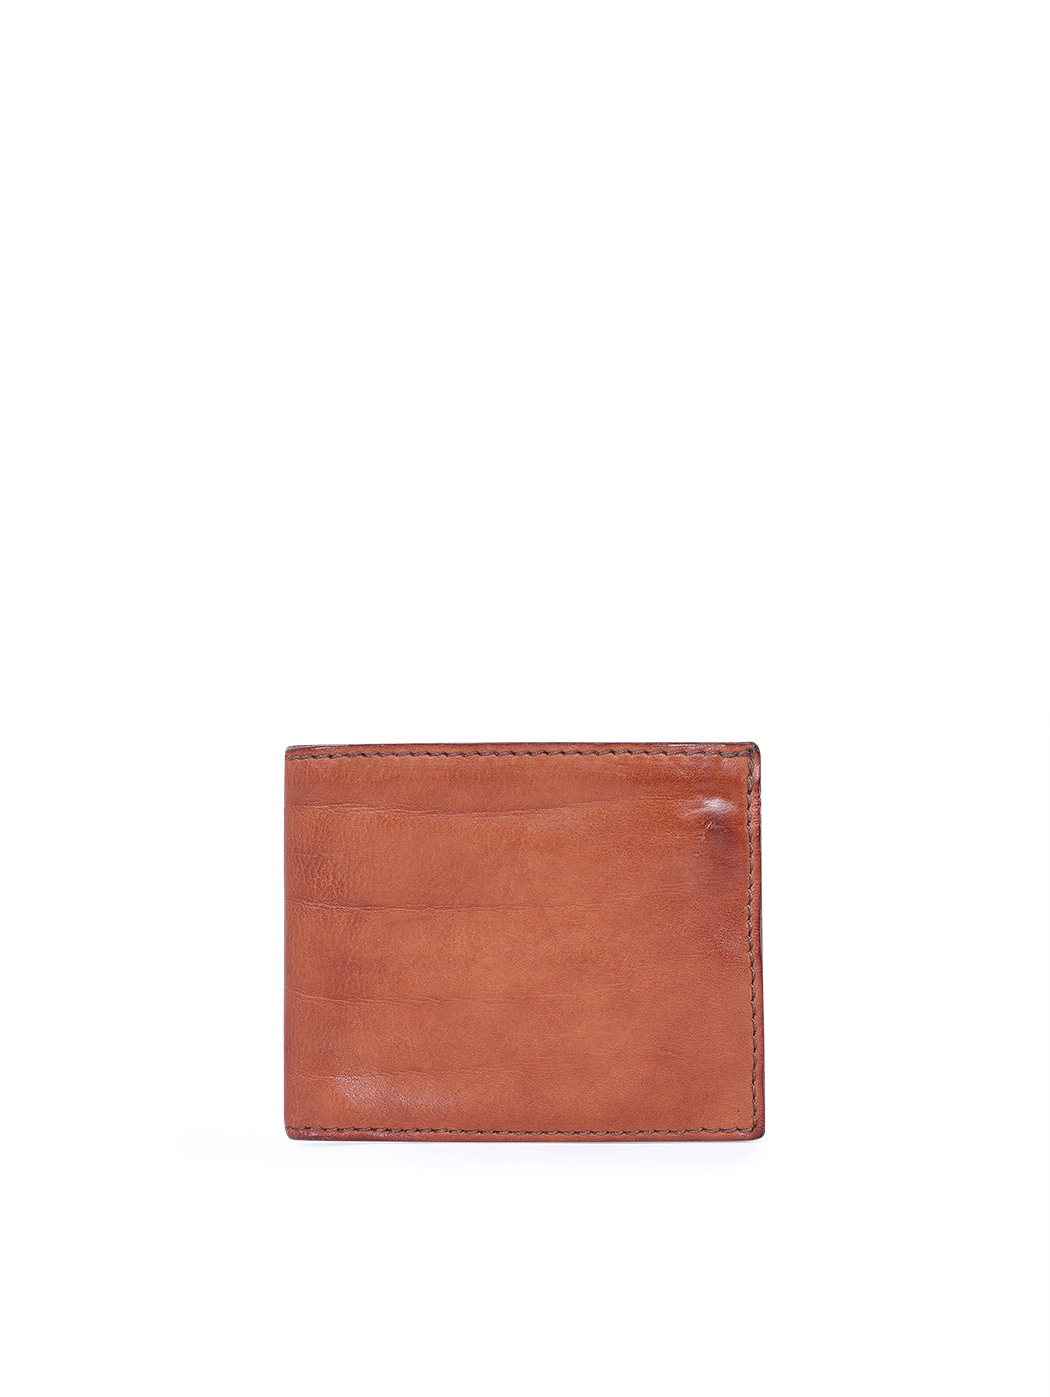 Vintage Leather Wallet for Men Cognac